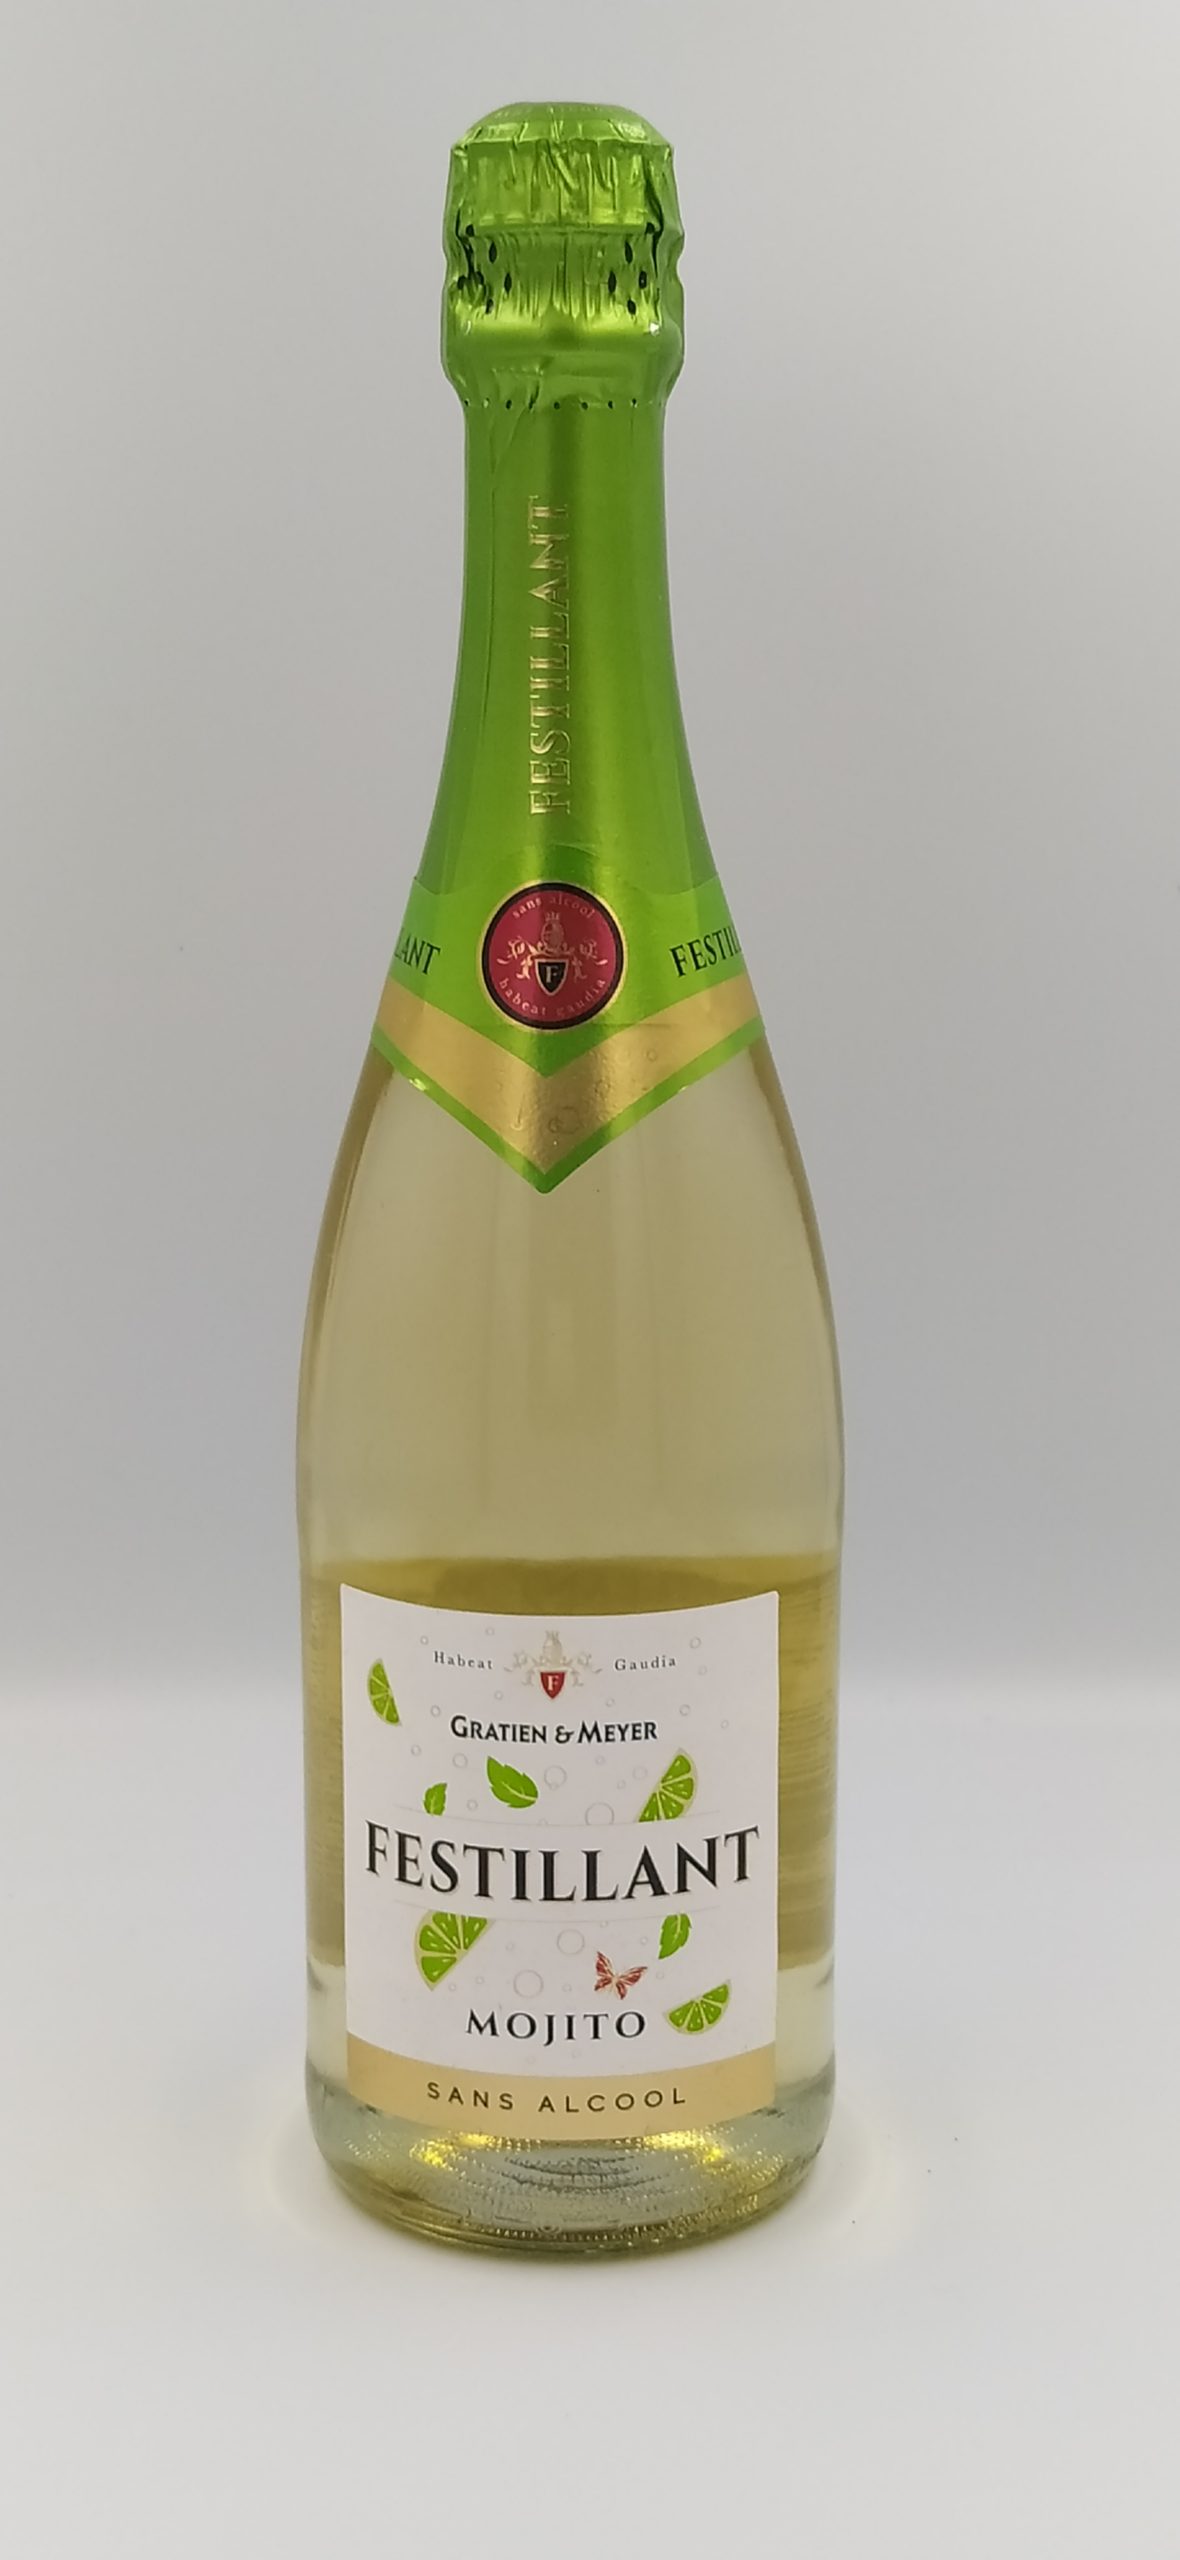 Festillant Blanc Sparkling Sans Alcool